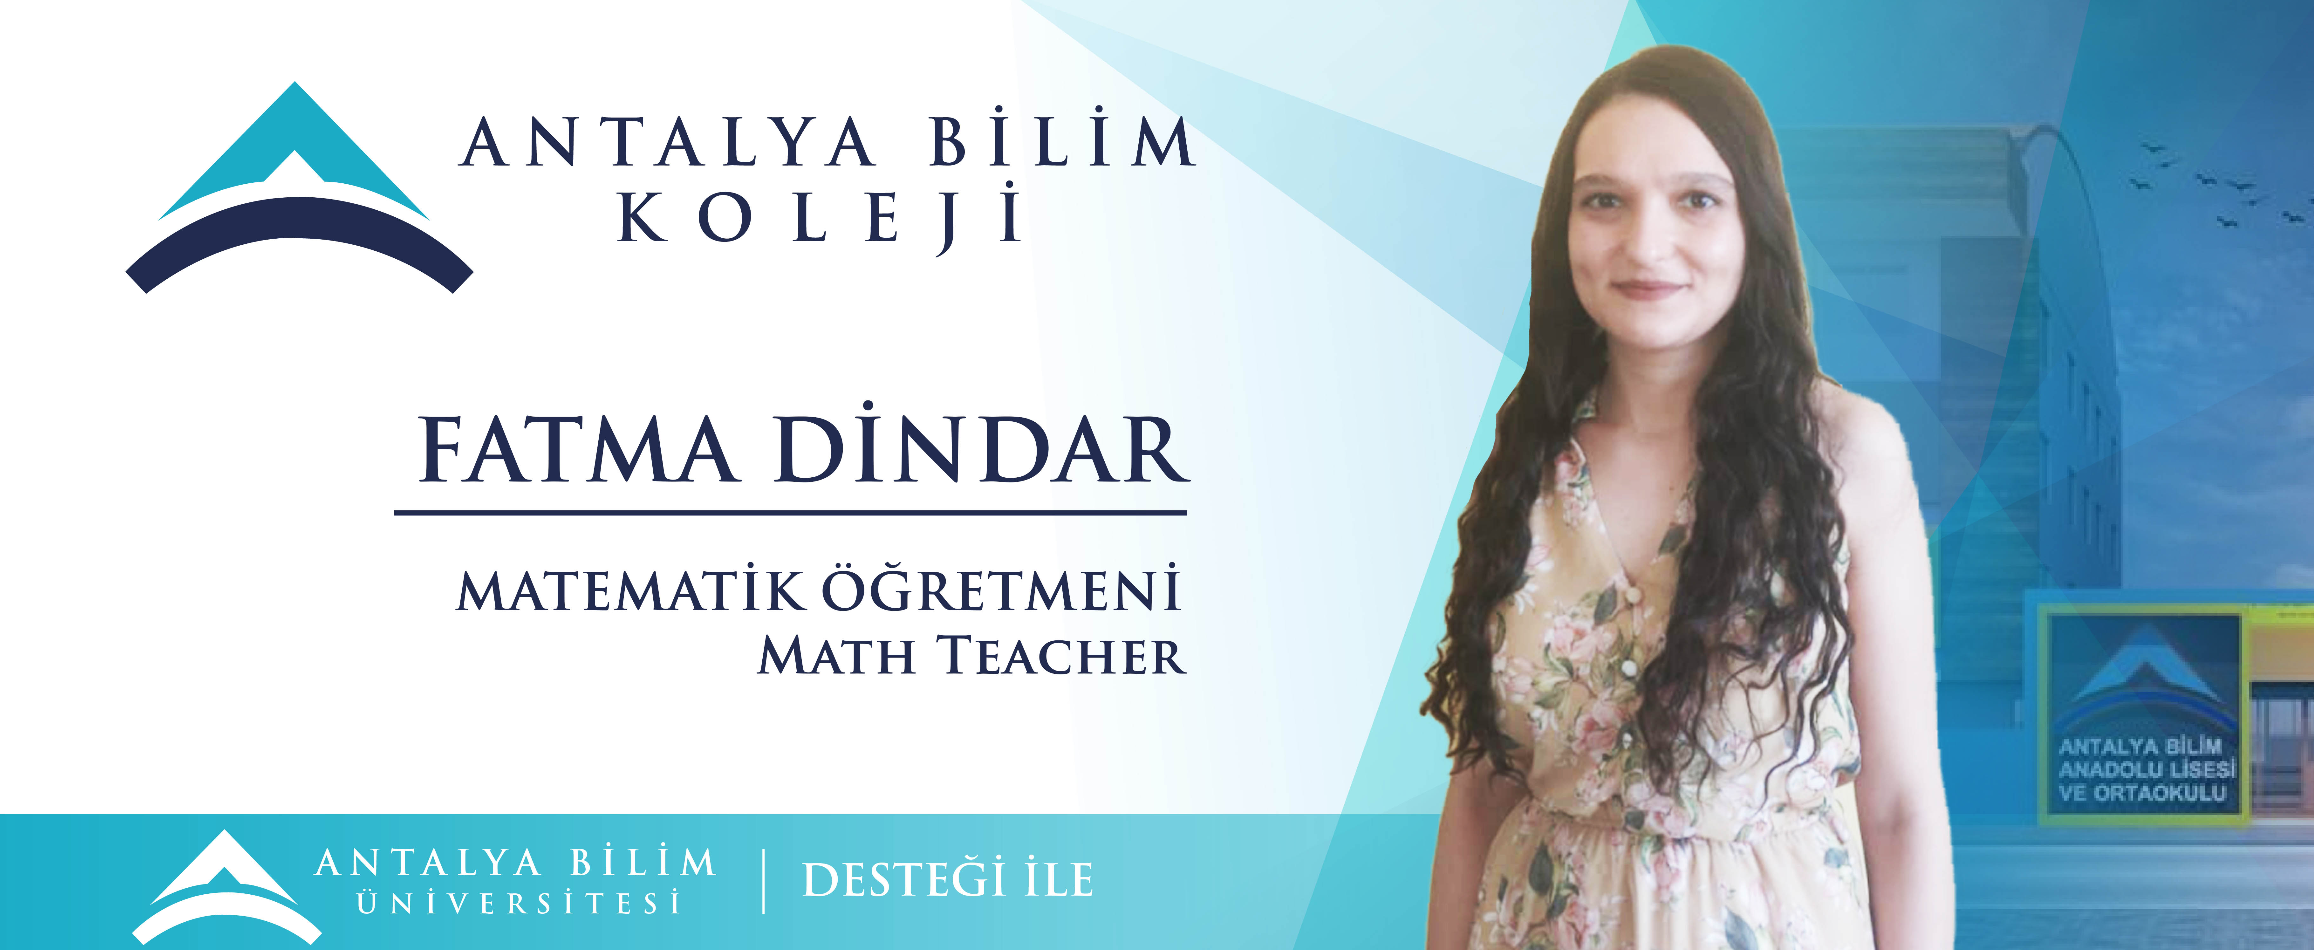 Fatma Dindar